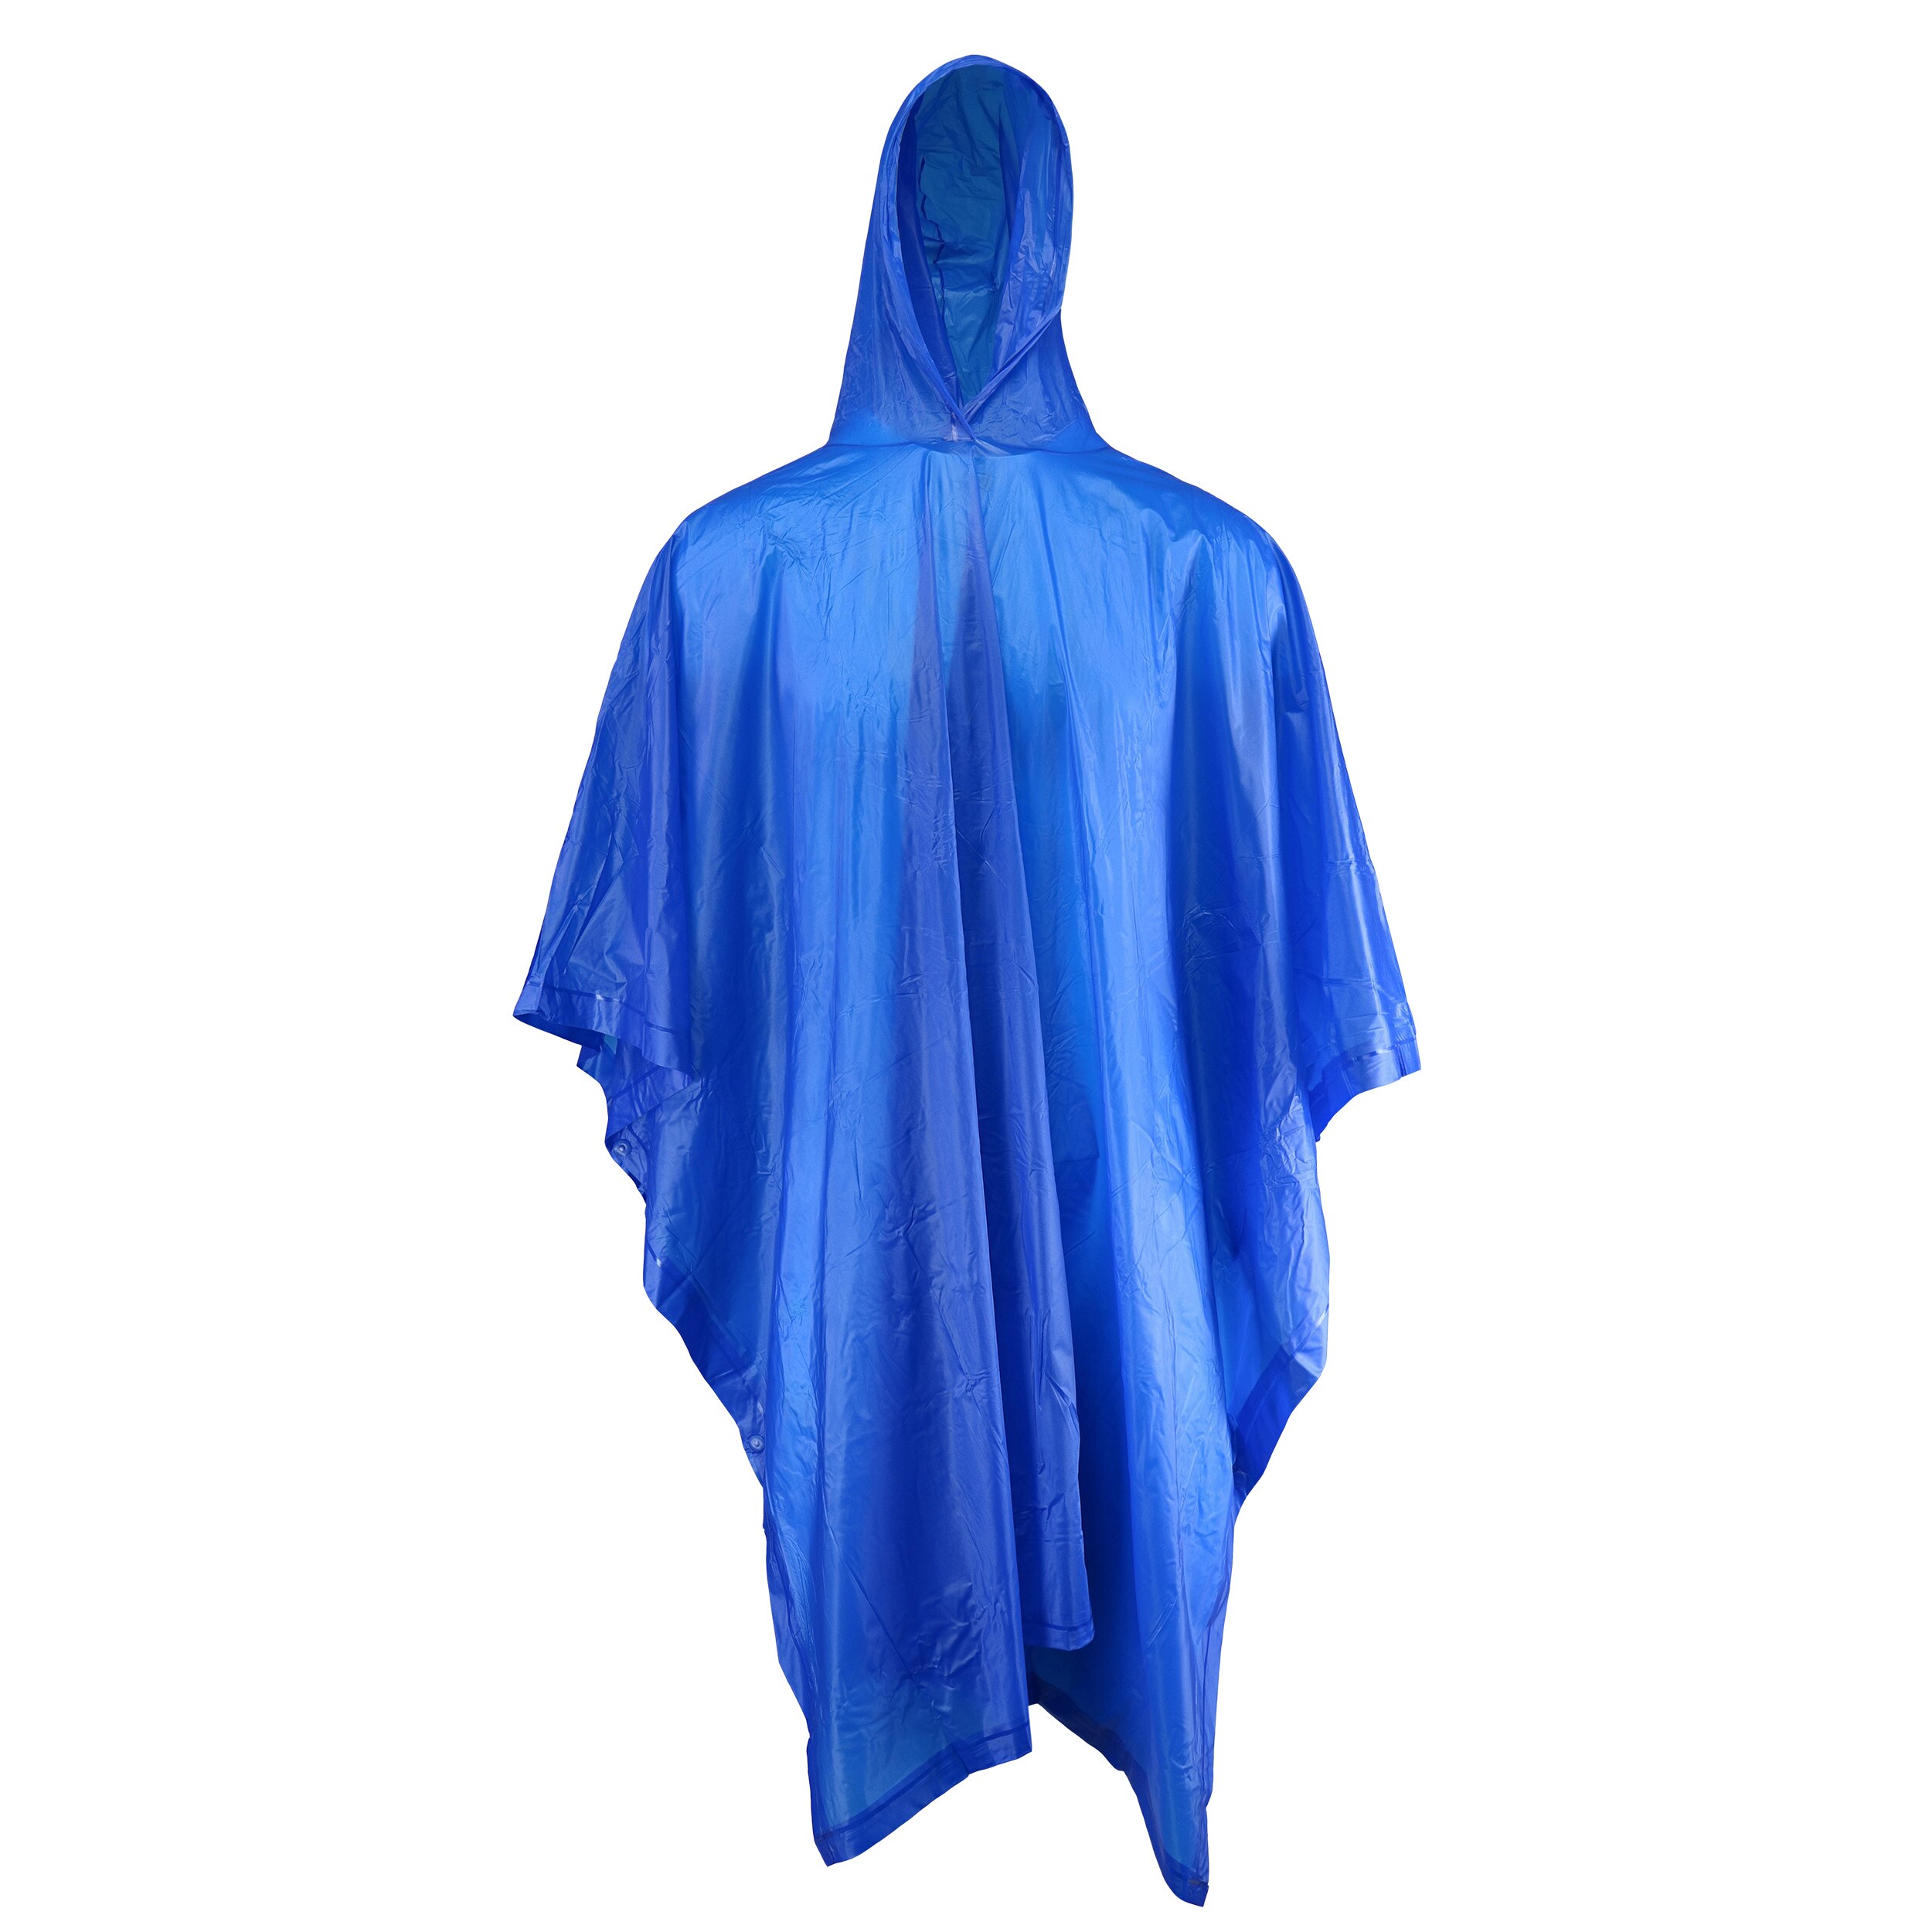 New Hooded Emergency Rain Poncho Clear Waterproof Raincoat One Size Fits Most 